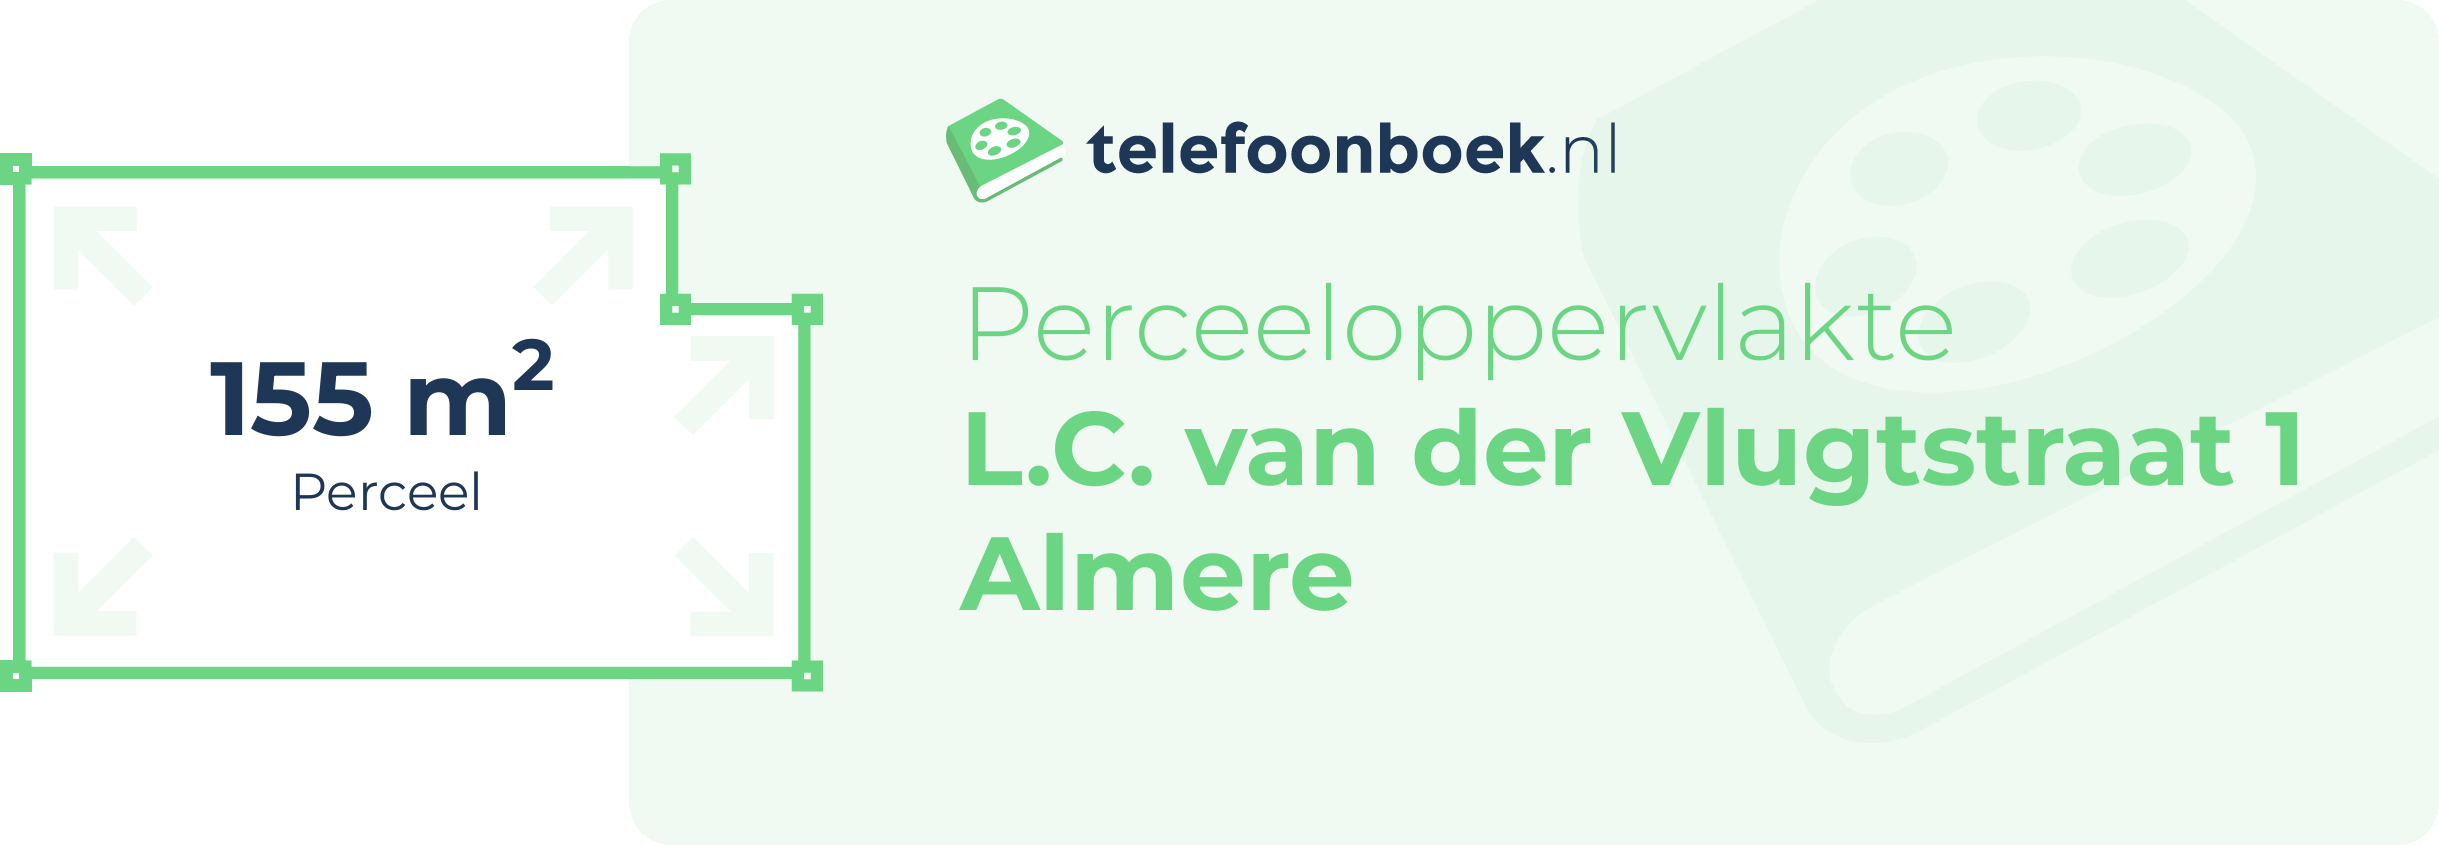 Perceeloppervlakte L.C. Van Der Vlugtstraat 1 Almere